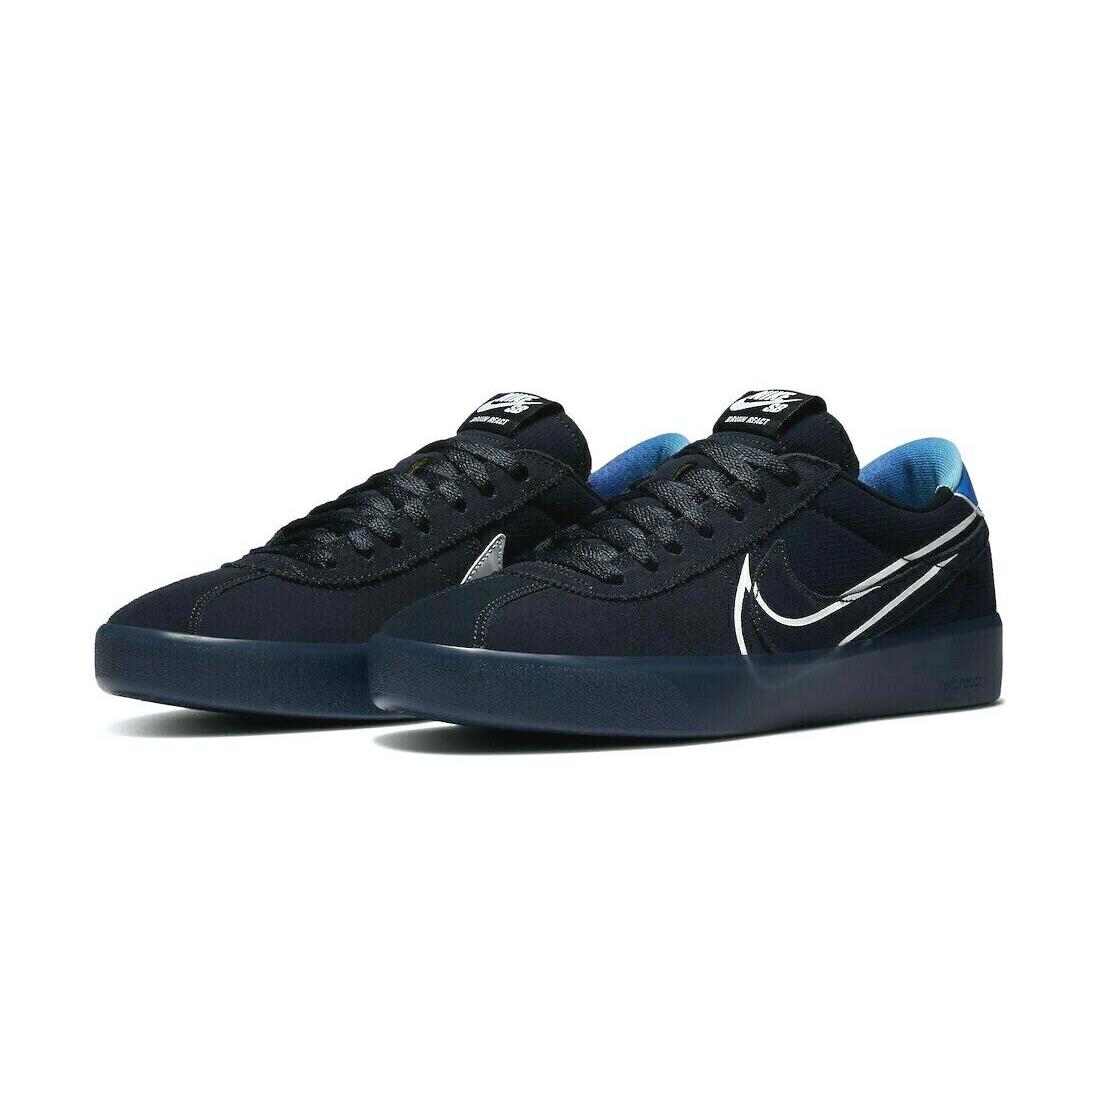 Nike SB Bruin React T Mens Size 11.5 Sneakers Shoes CV5980 400 Dark Obsidian